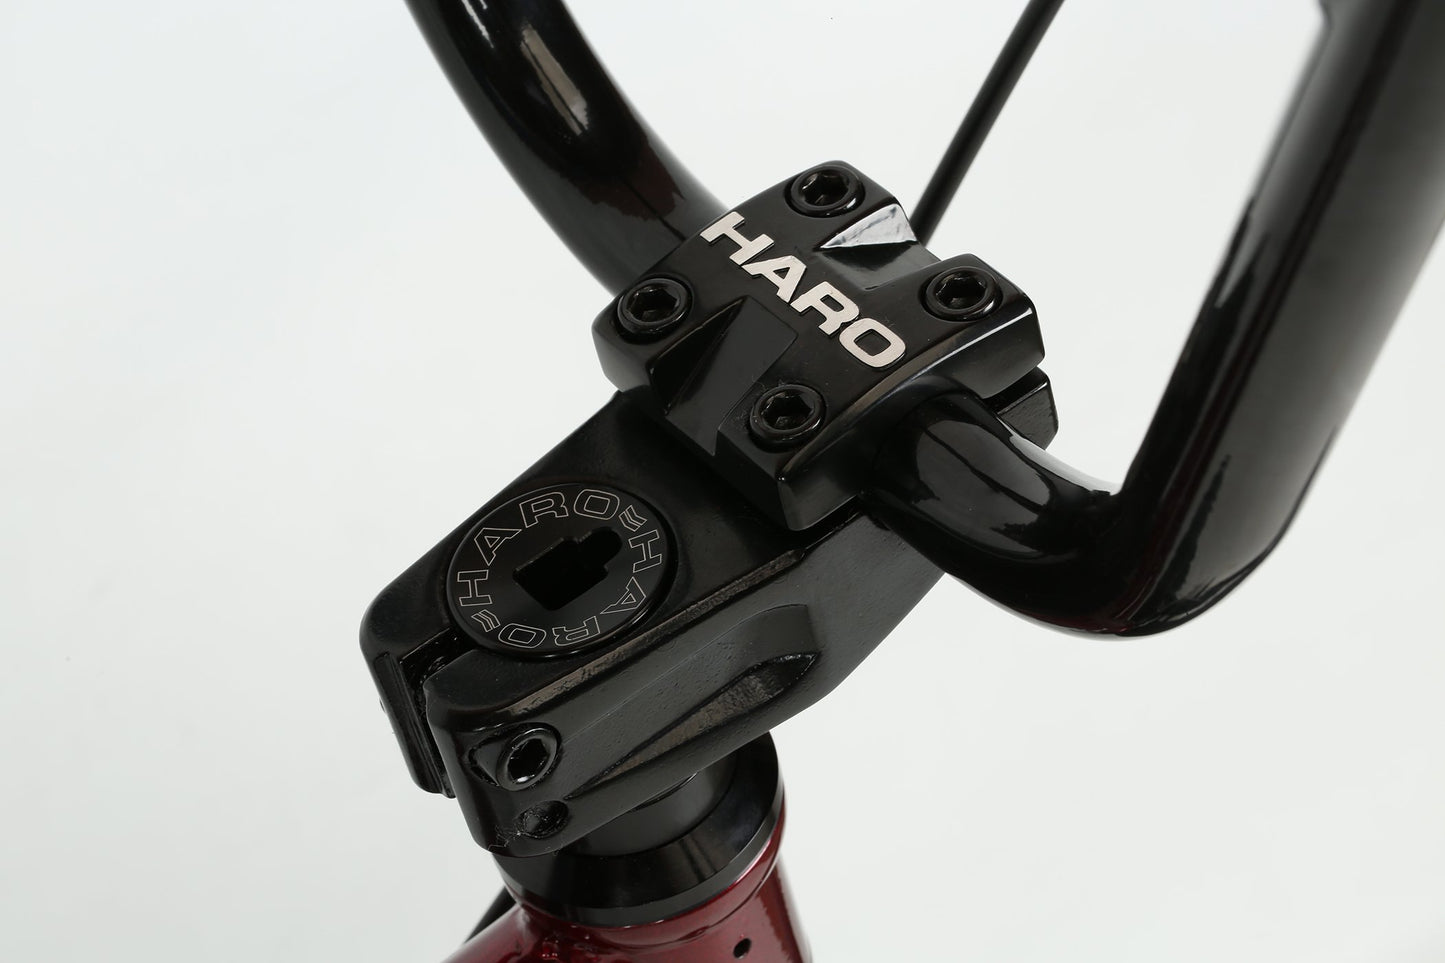 Haro Midway 20.75" RHD BMX Bike Cherry Red